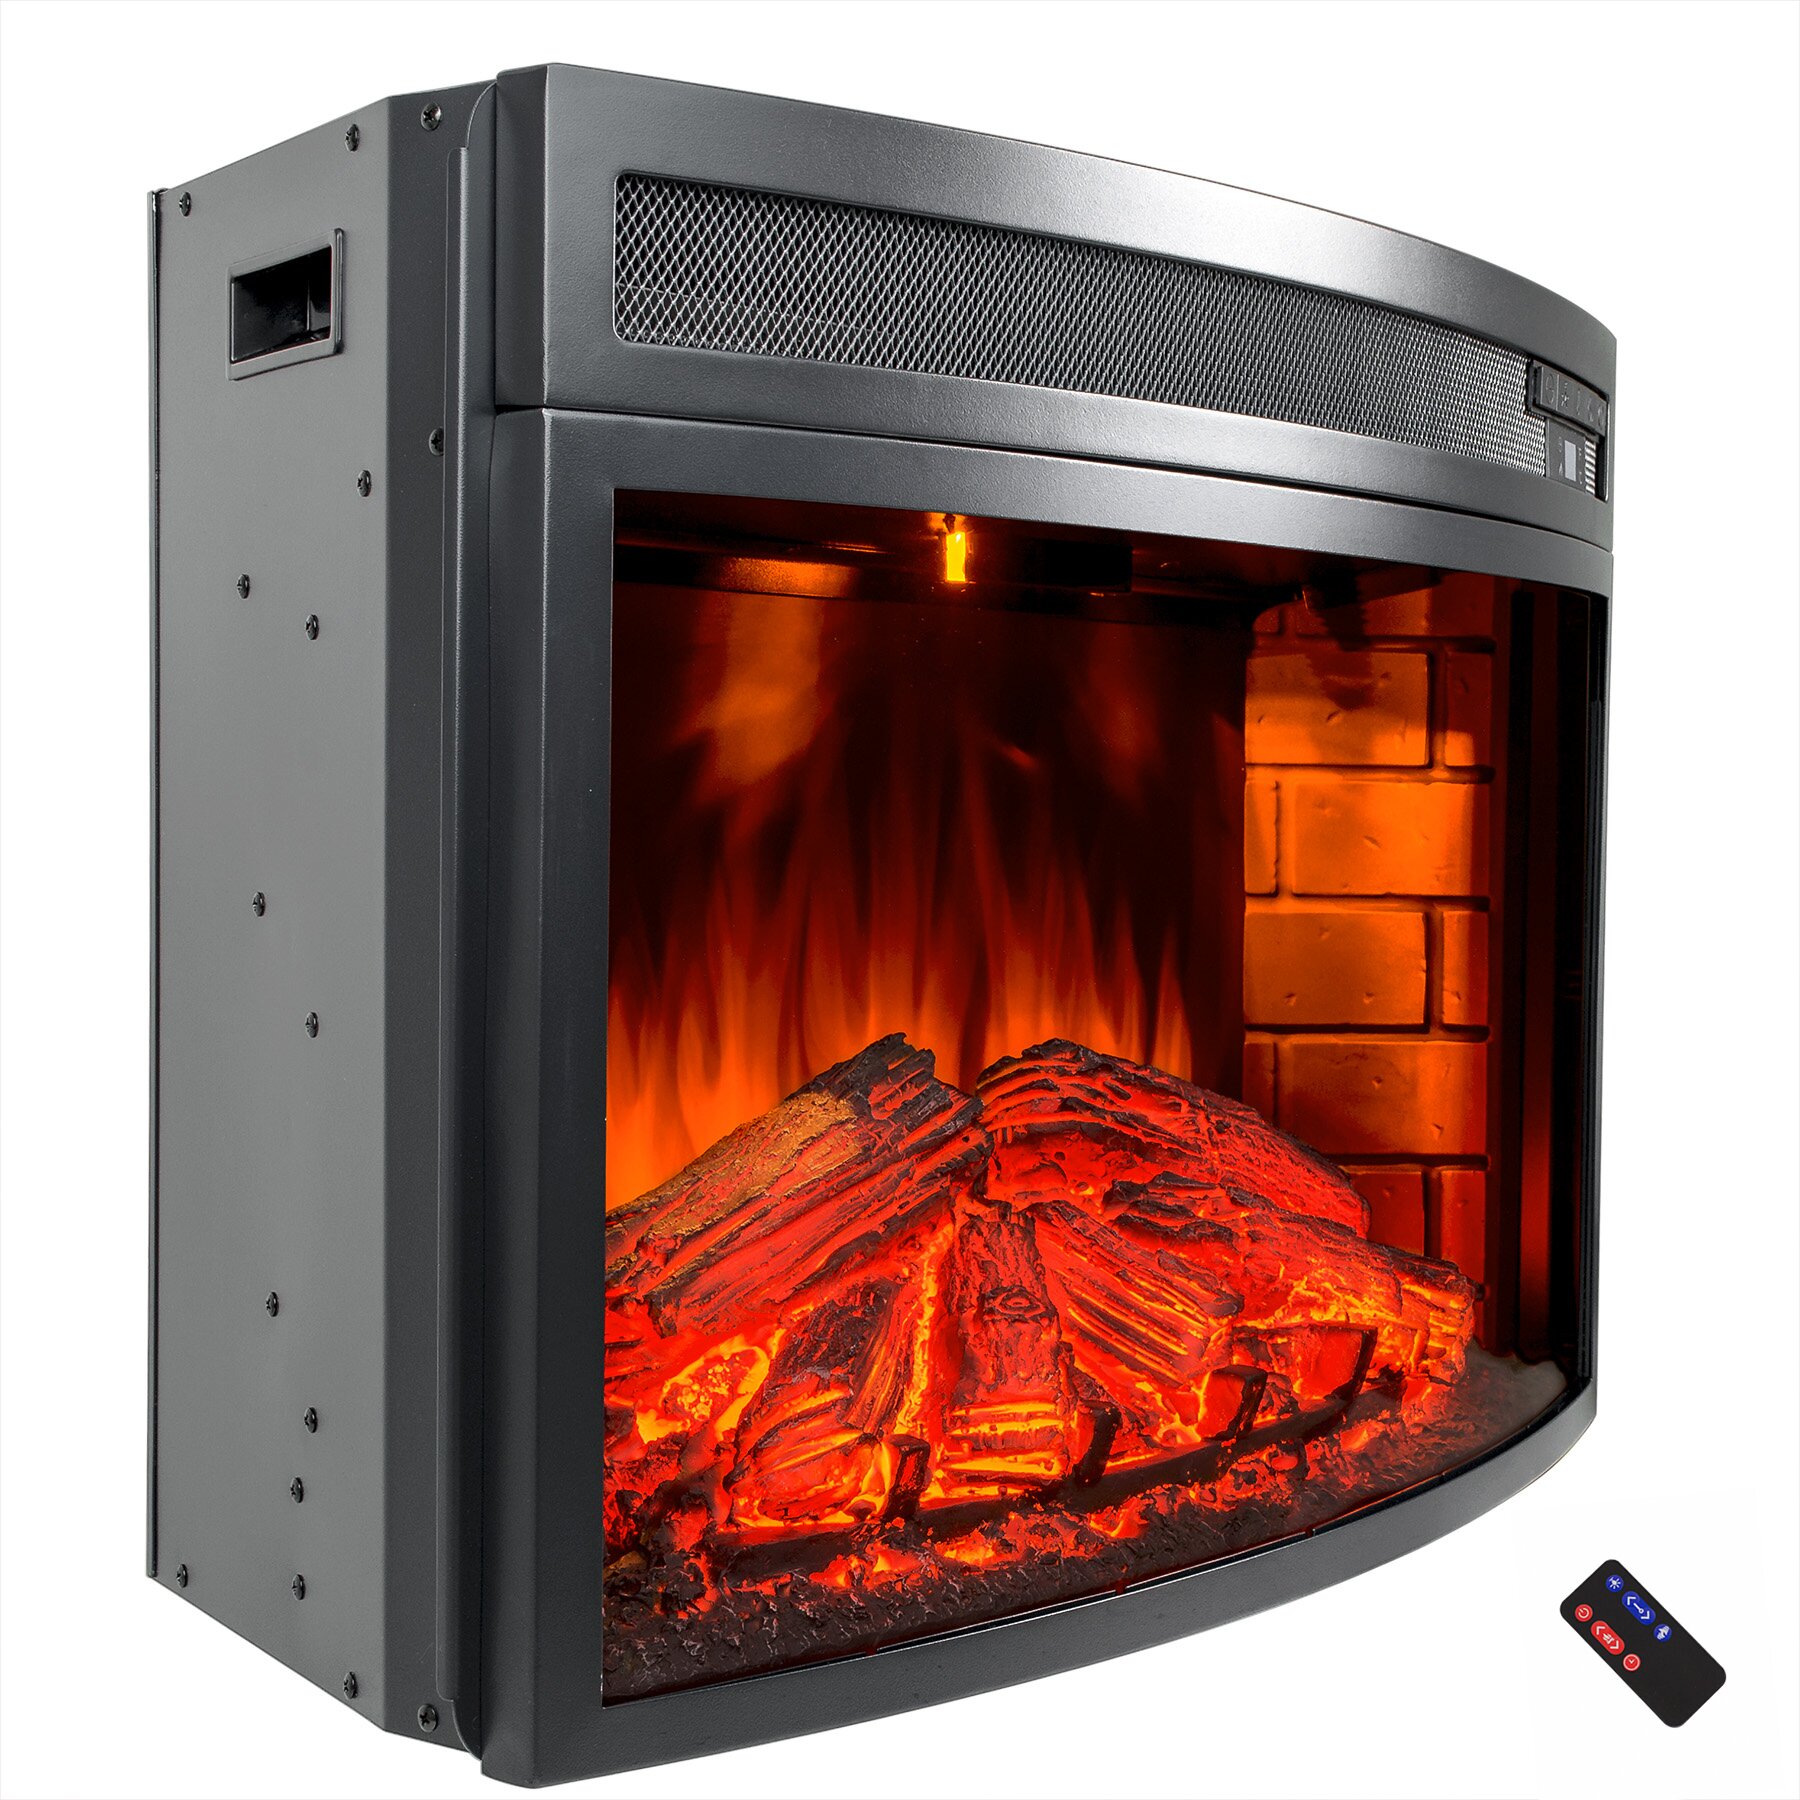 AKDY Wall Mount Electric Fireplace Insert & Reviews | Wayfair